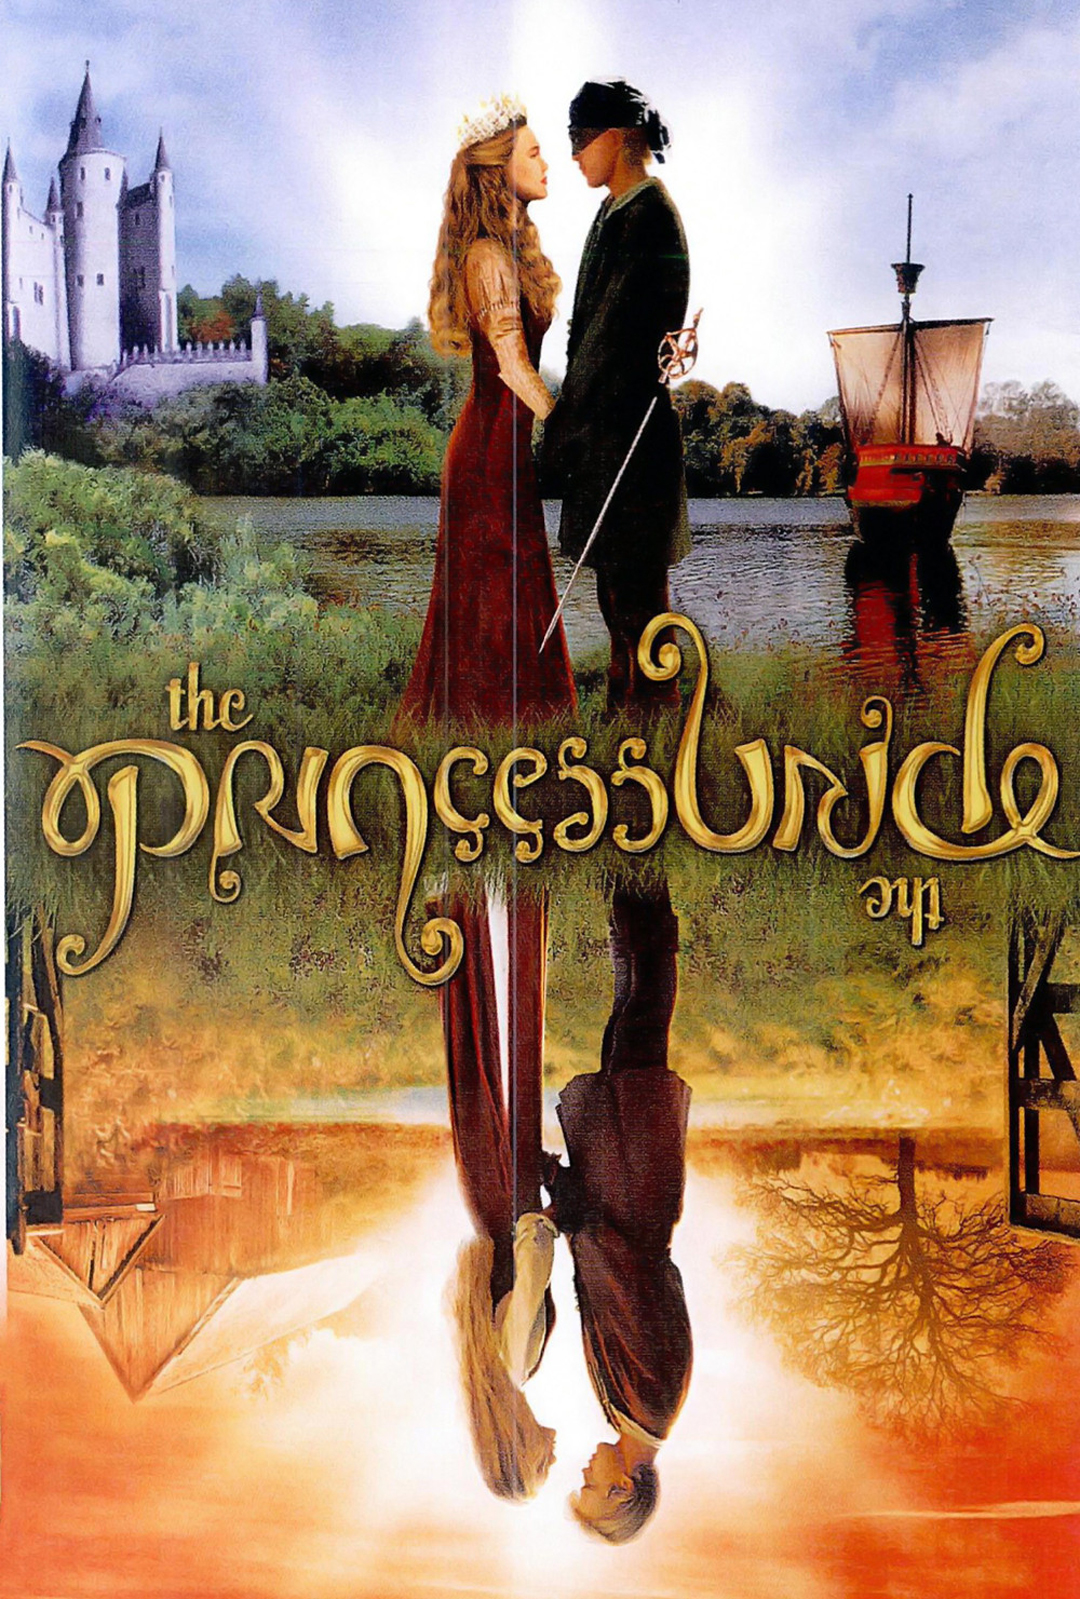 The Princess Bride - Movie Wallpapers | Wallpaper Send!